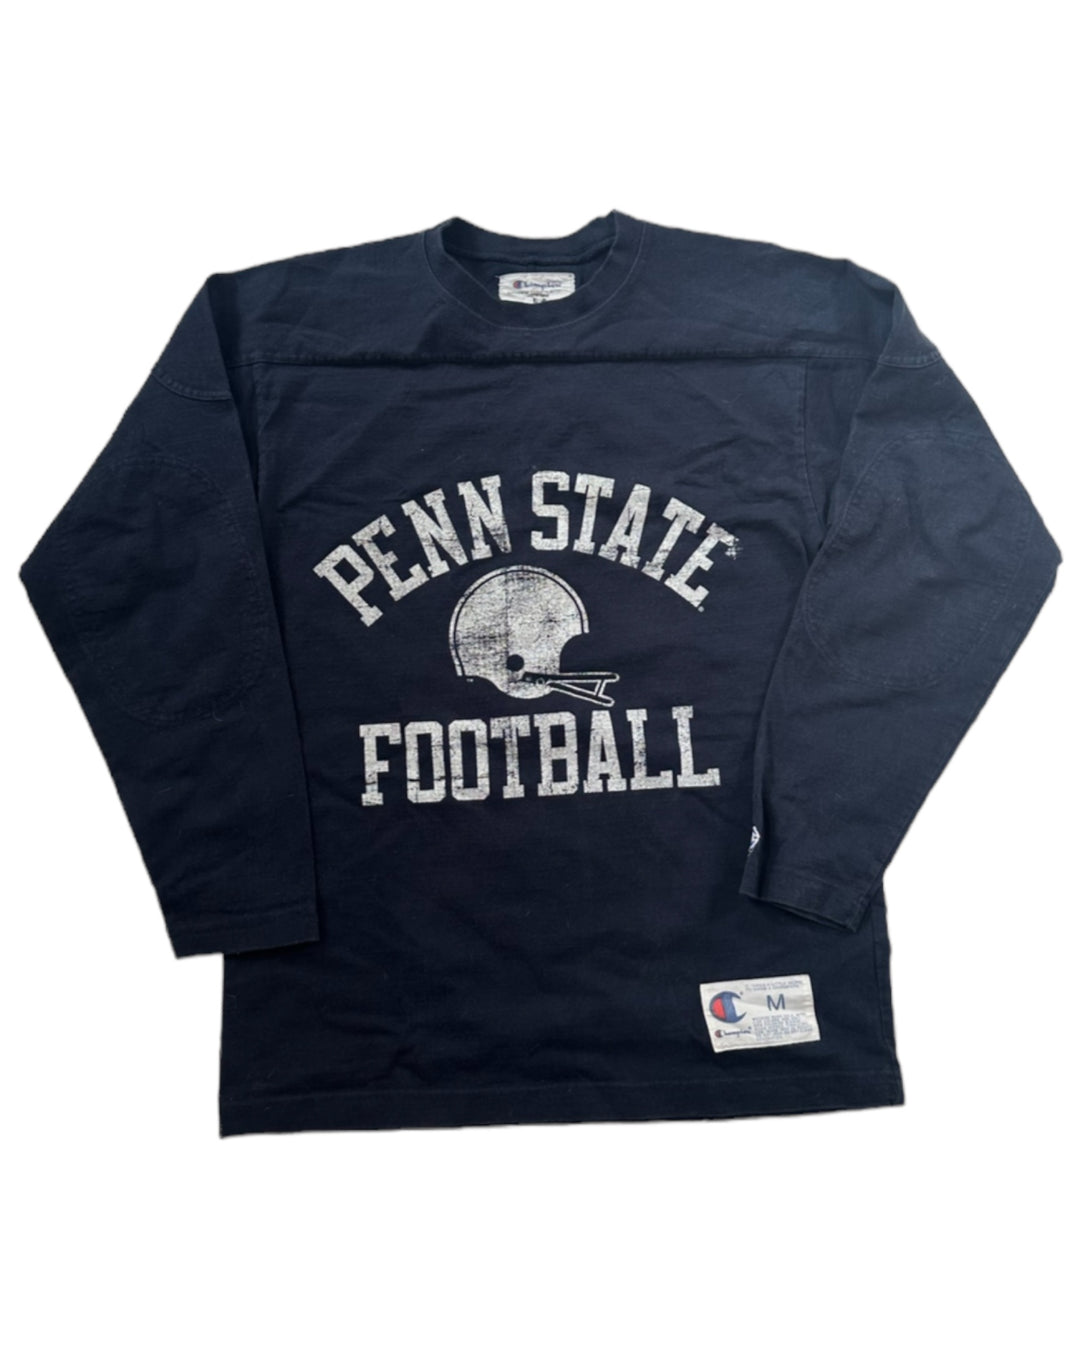 Penn State Vintage Football Shirt